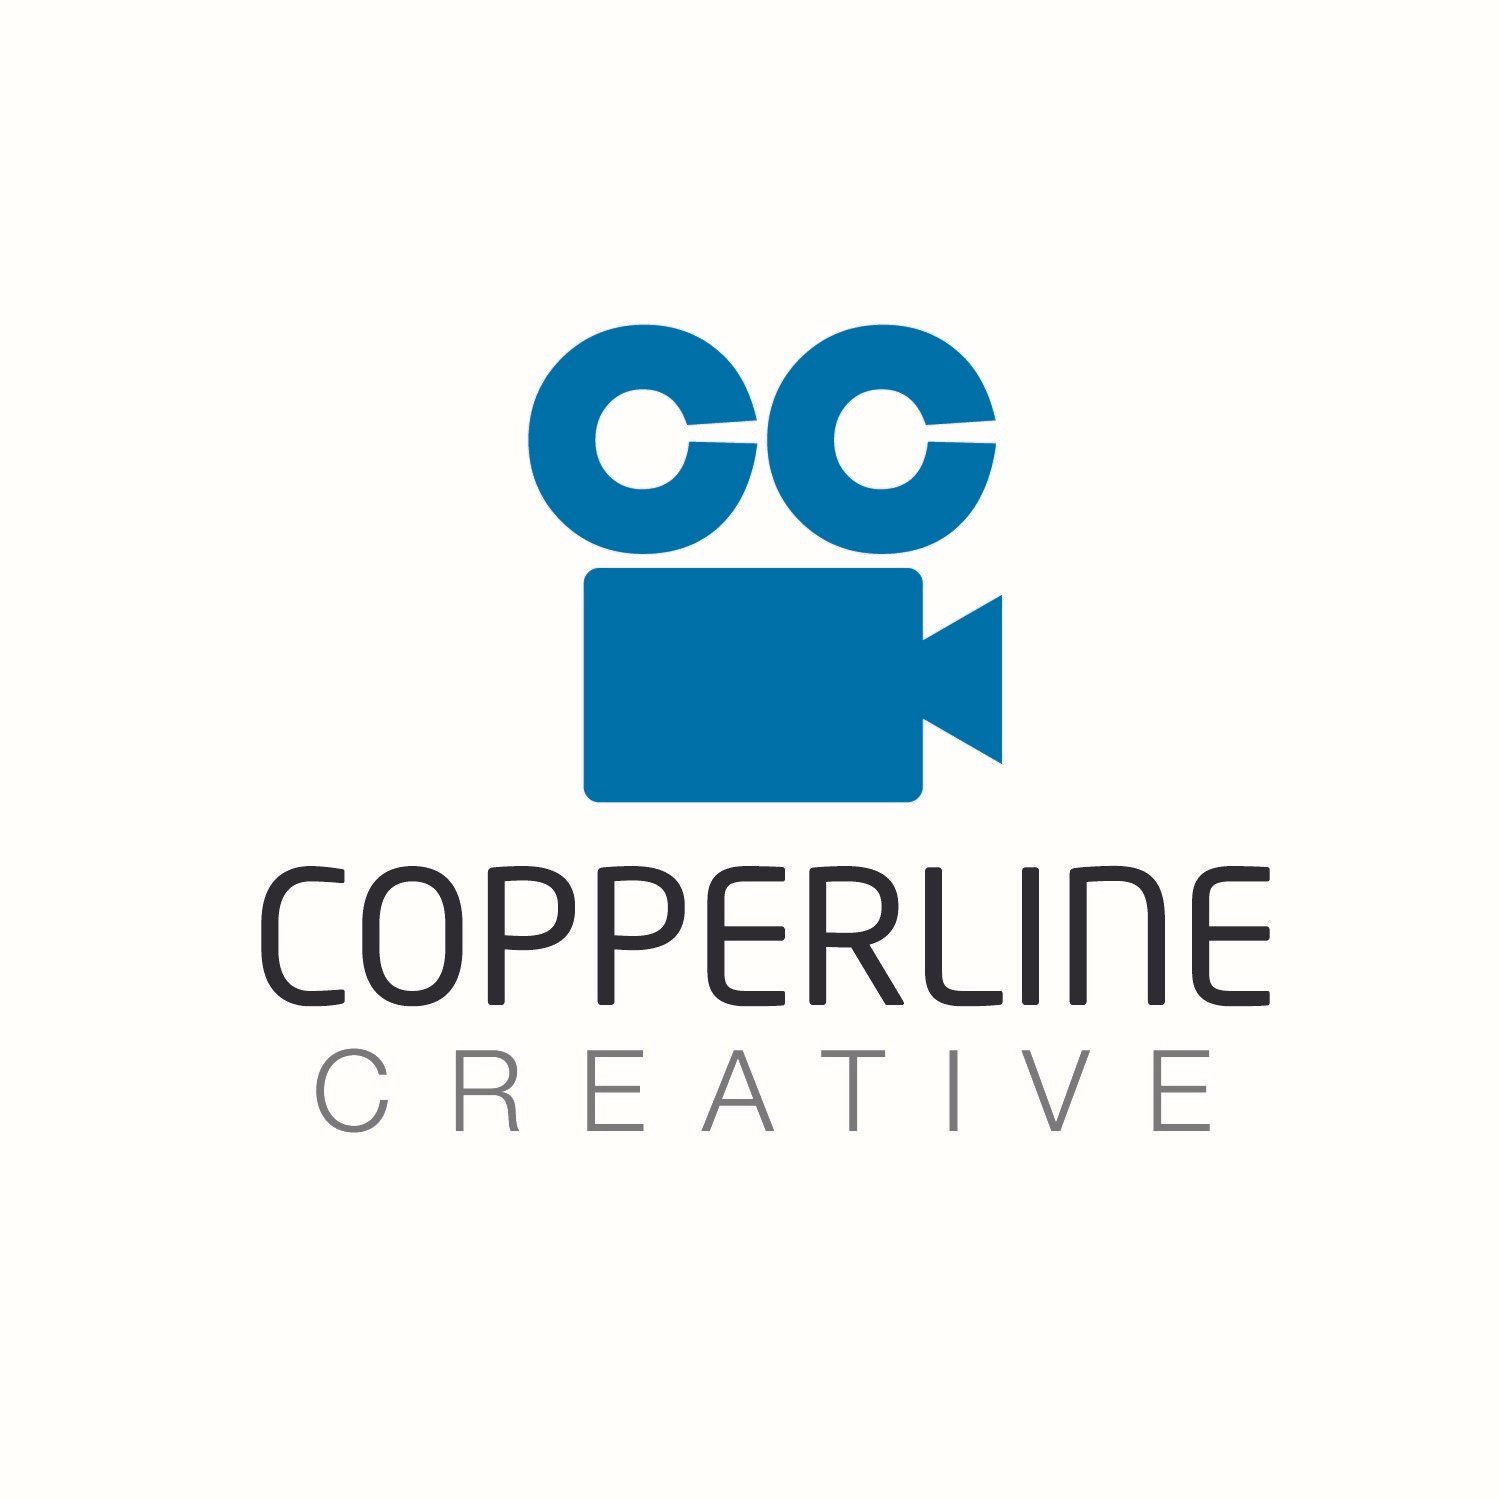 Copperline creative.jpg